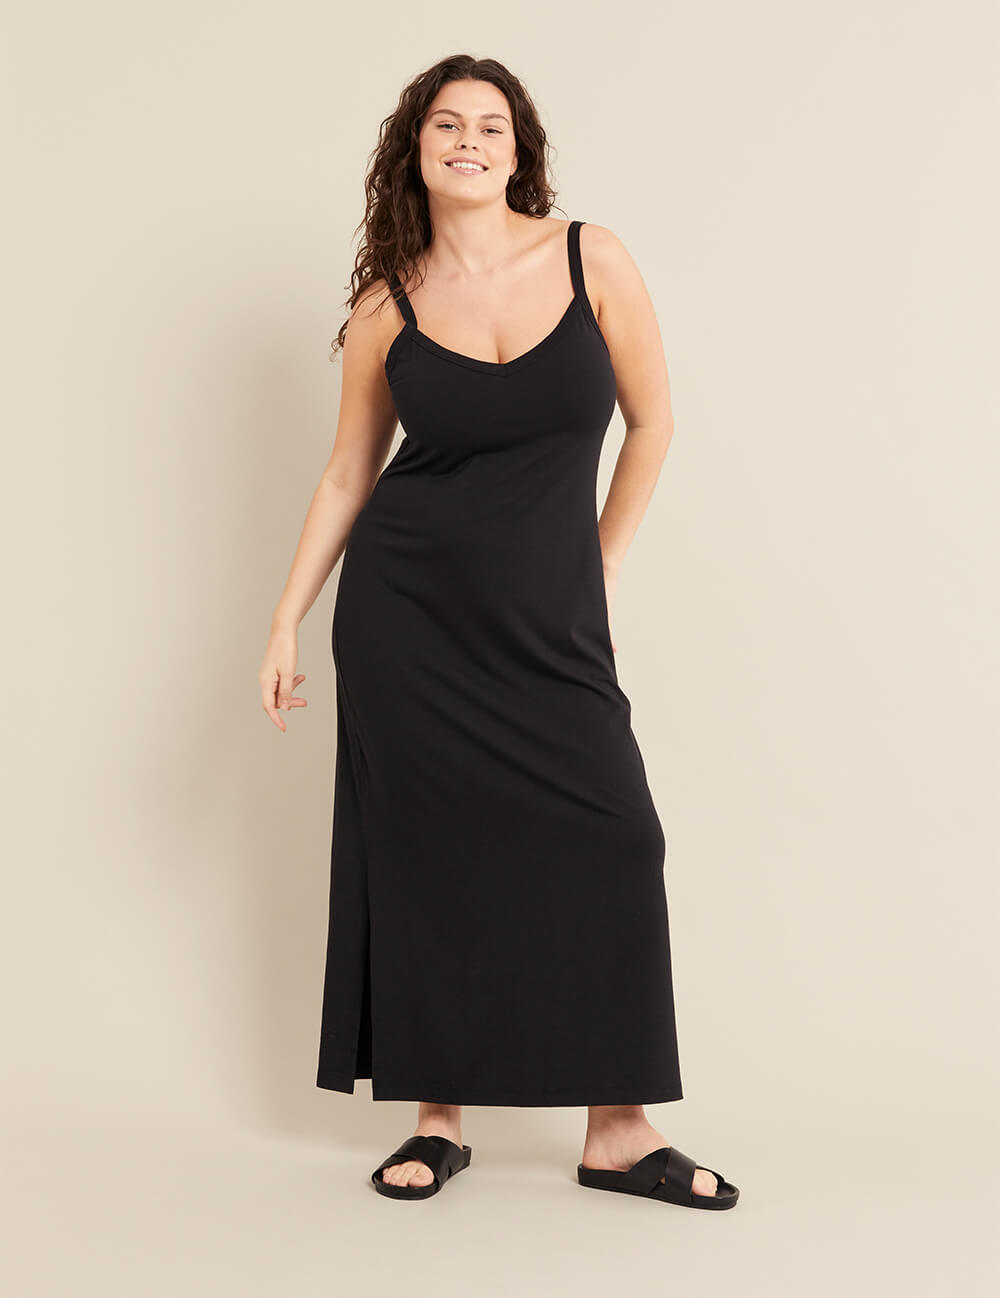 Boody Women's V-Neck Slip Dress in Black Front 3